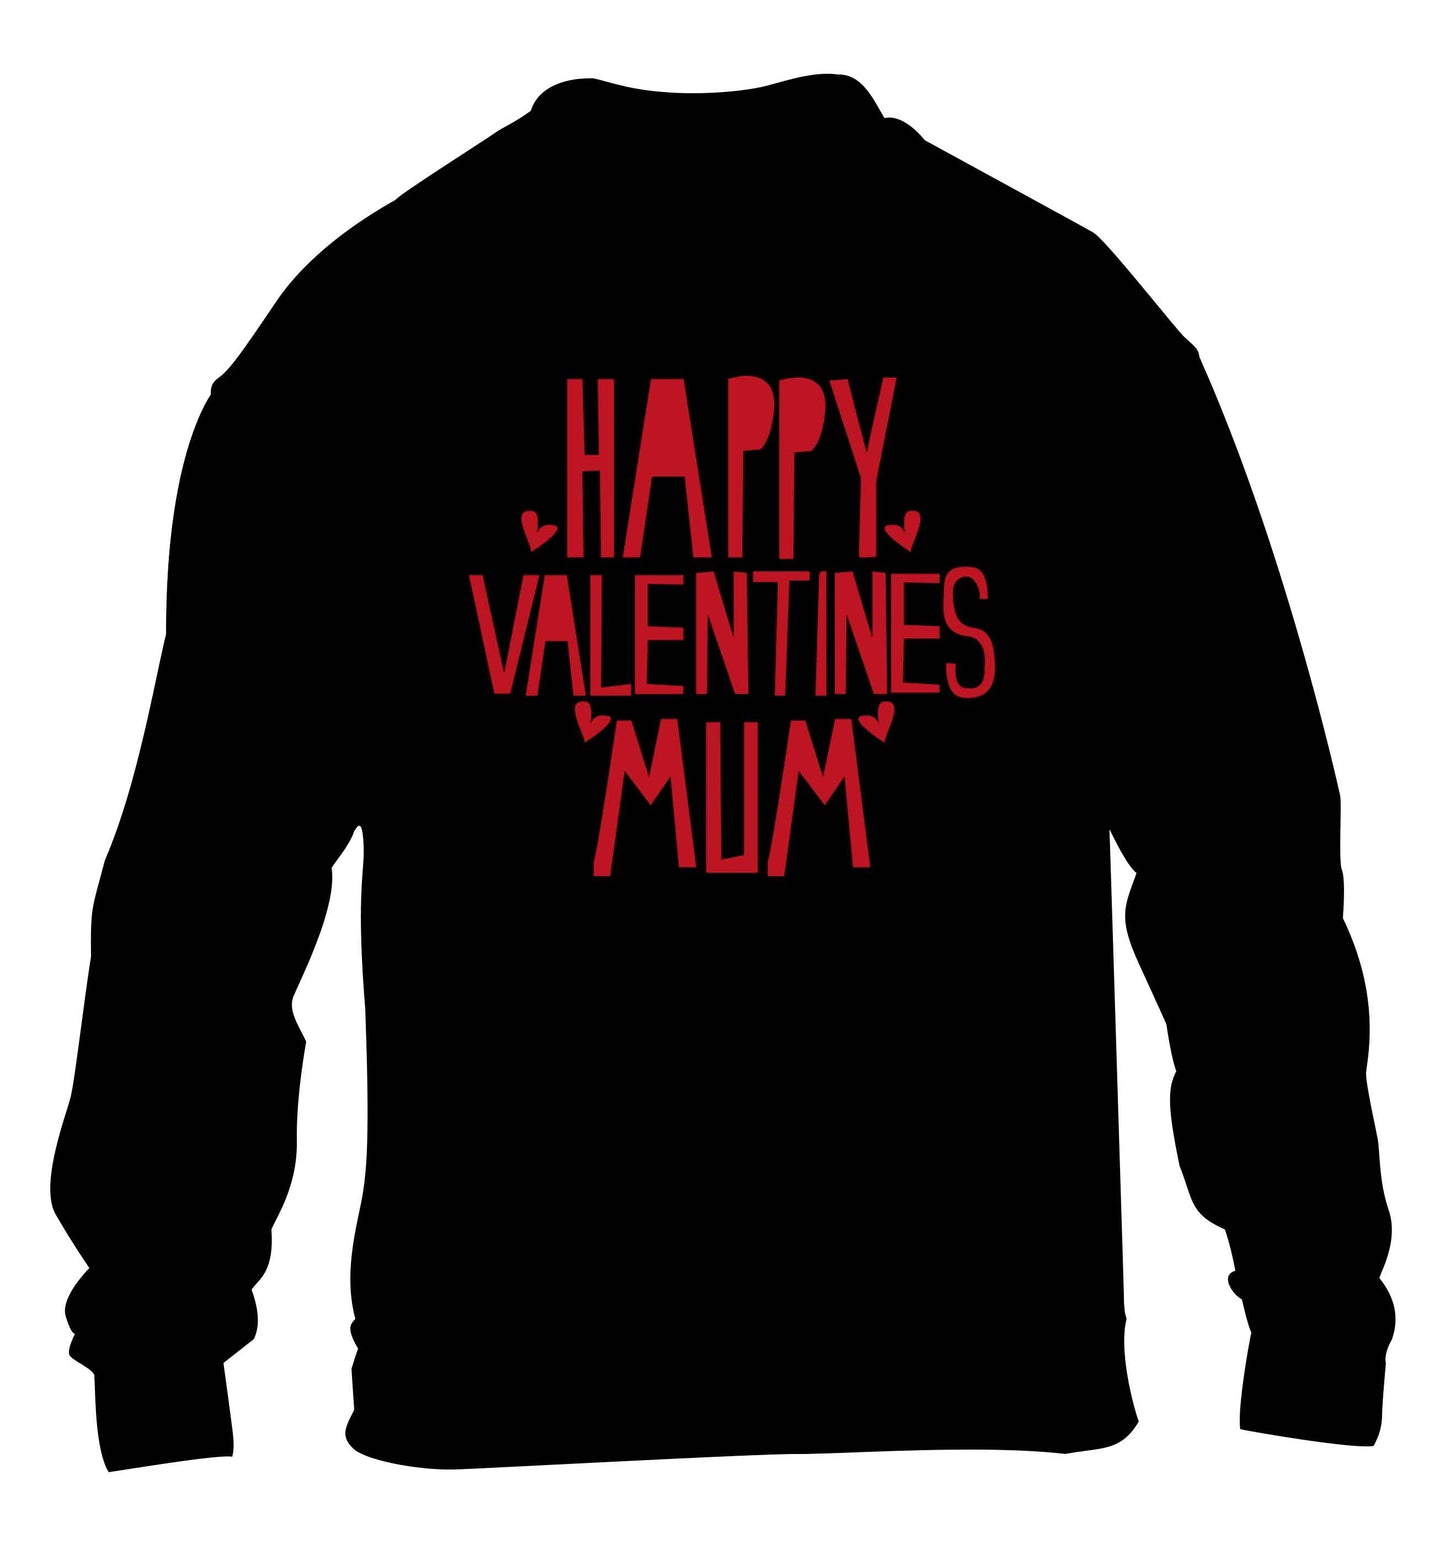 Happy valentines mum children's black sweater 12-13 Years